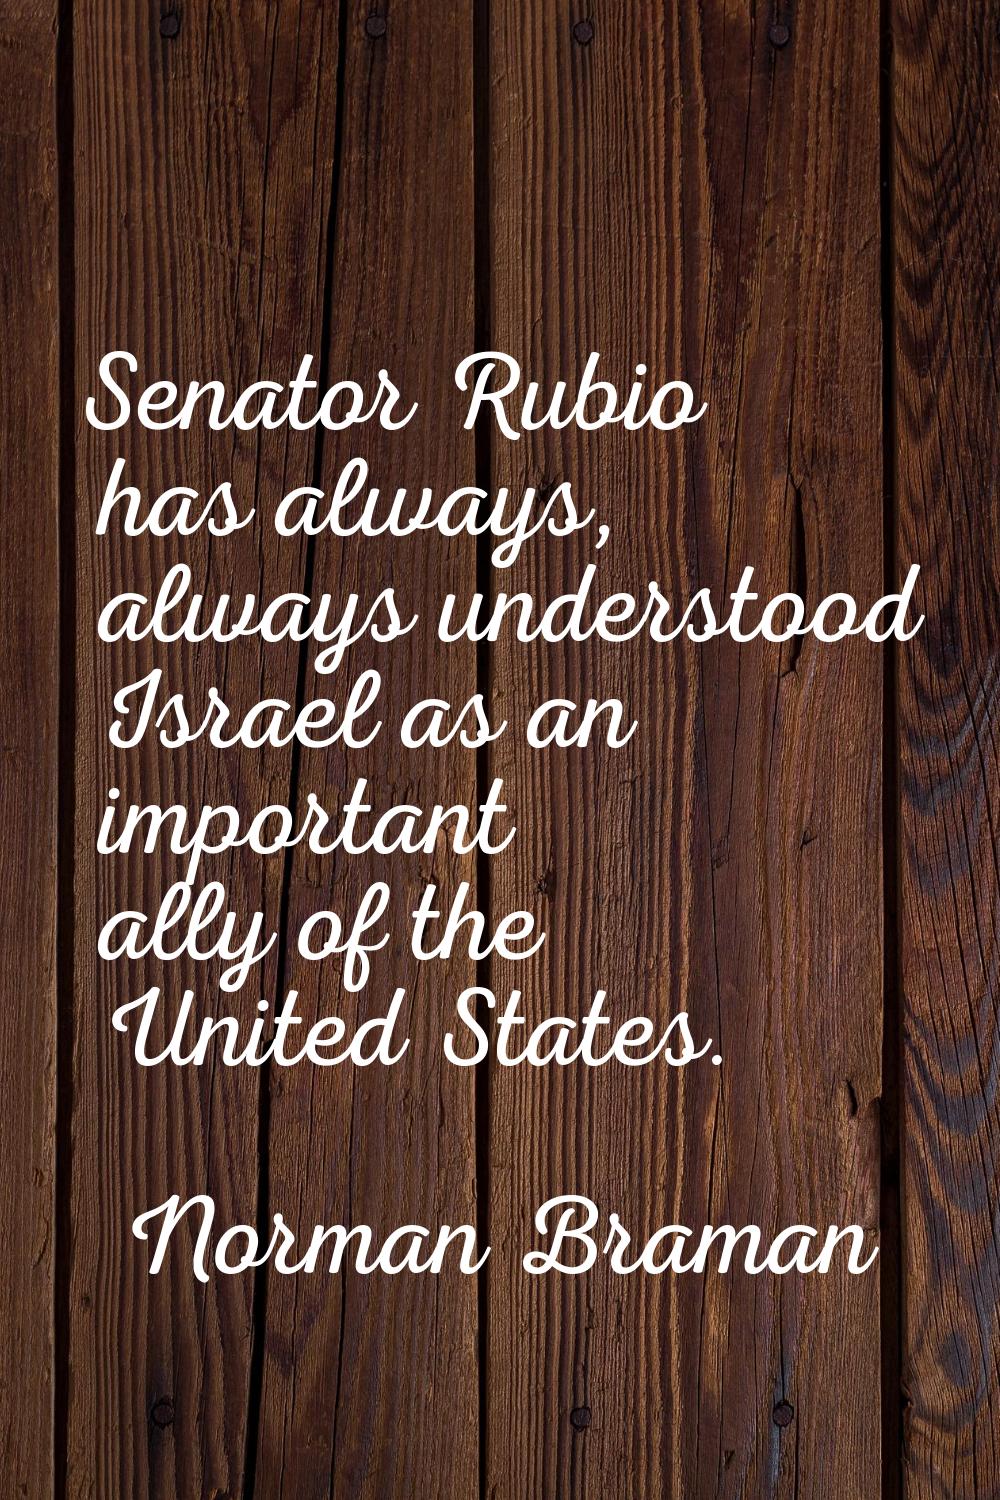 Senator Rubio has always, always understood Israel as an important ally of the United States.